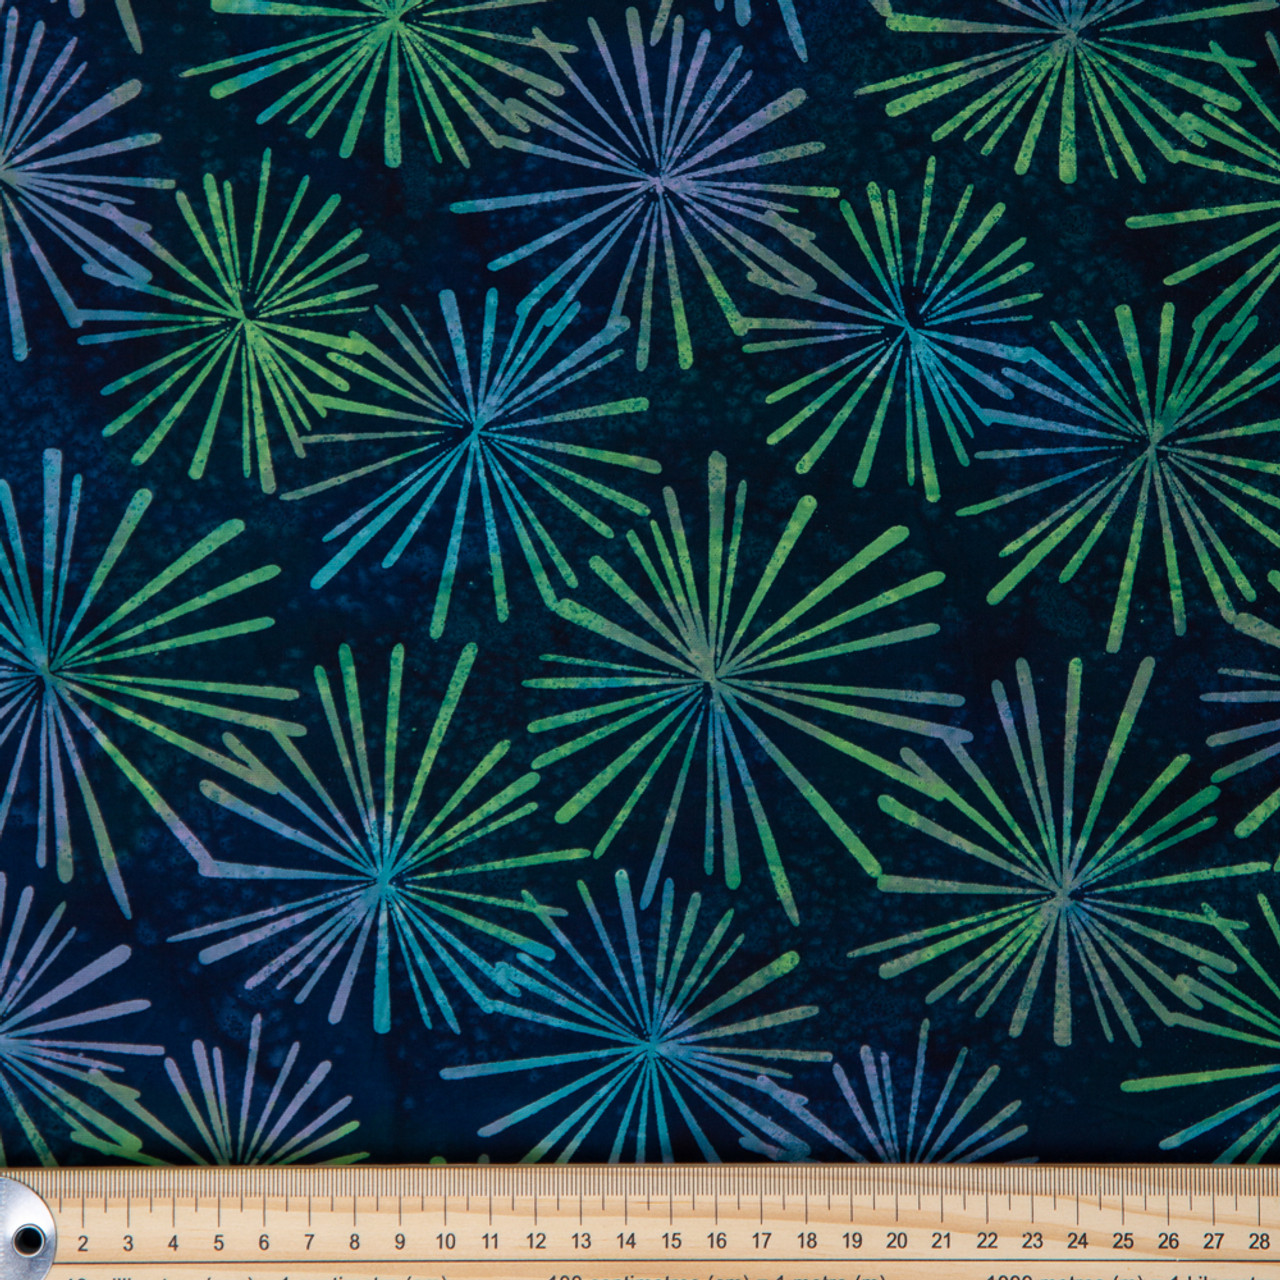 Batik: Fireworks on Midnight - 100% Cotton